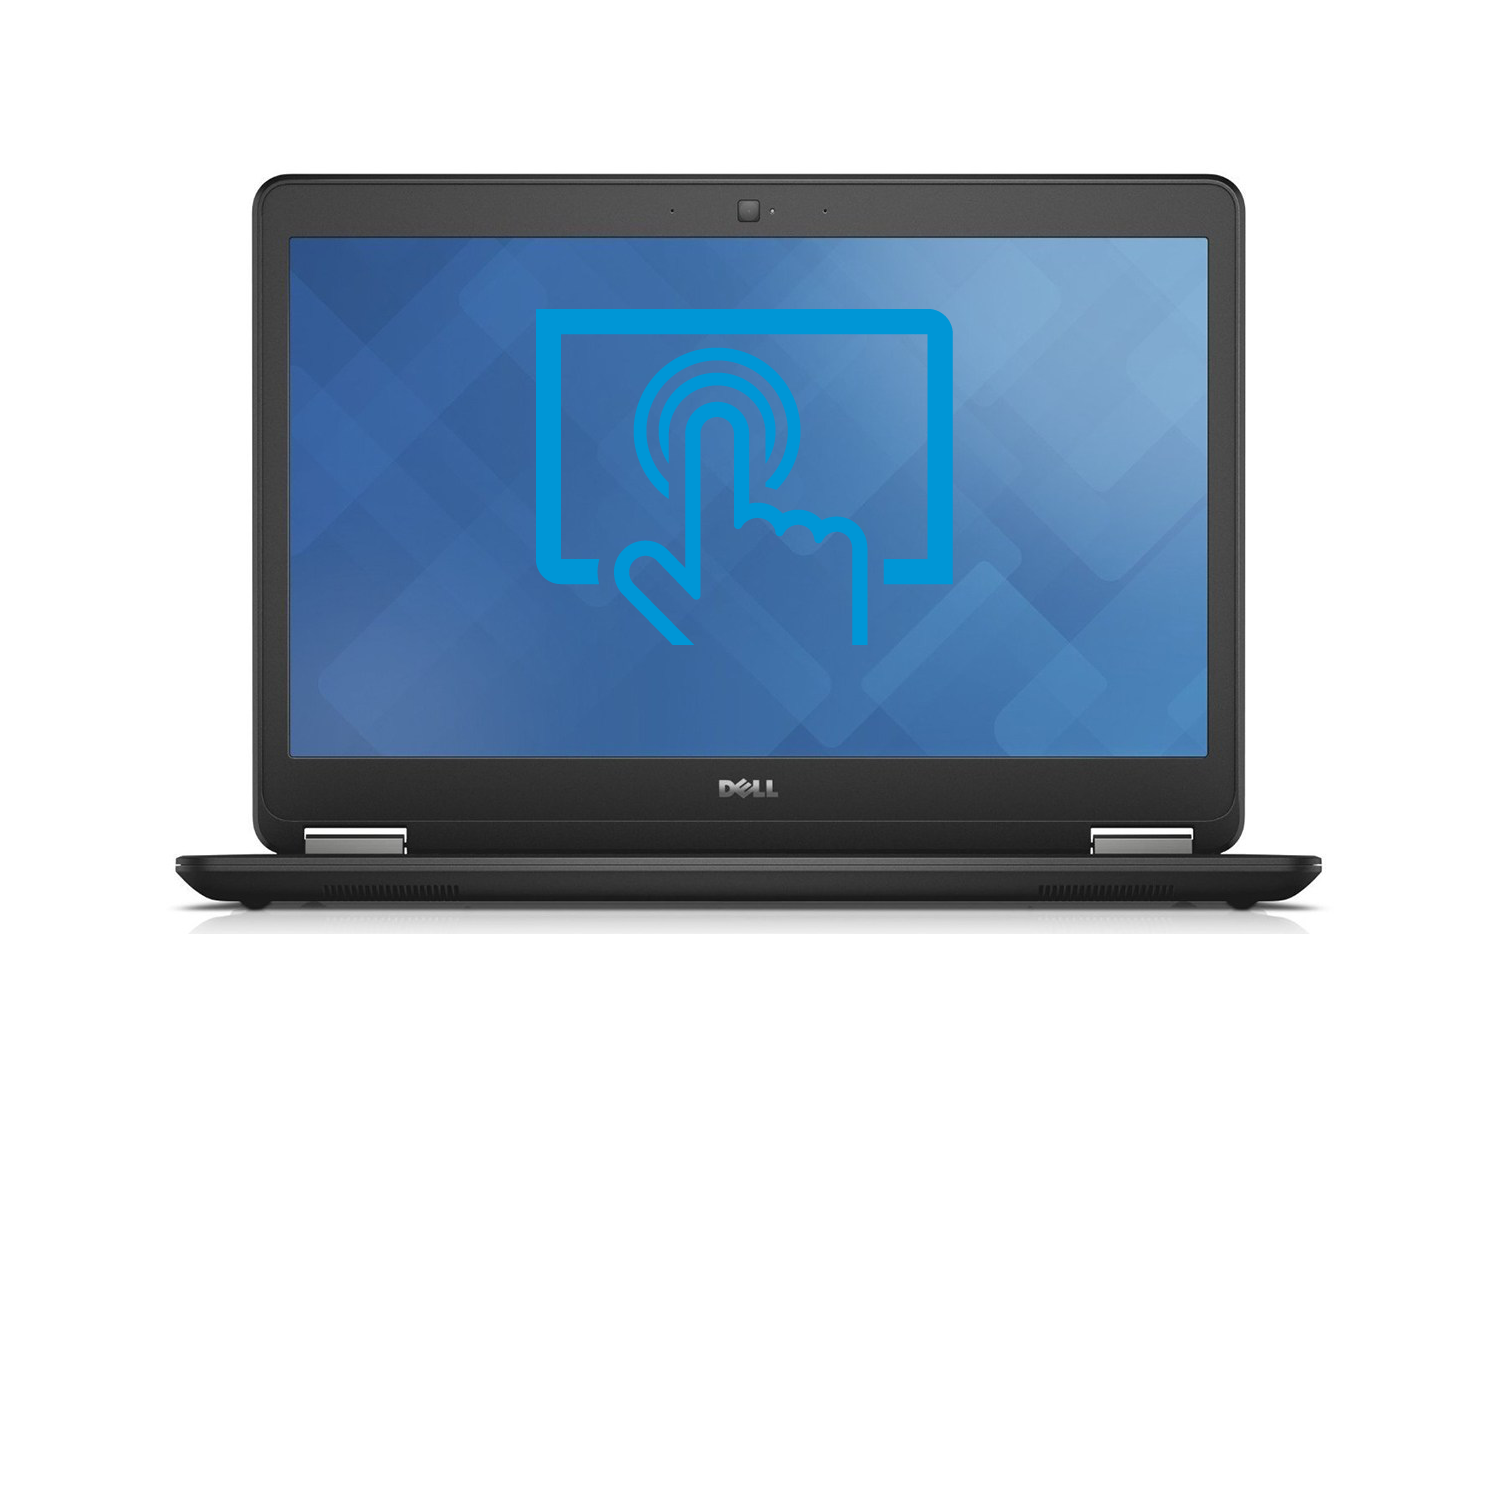 Refurbished (Good) - Dell Latitude E7450 Touch Screen Business Ultrabook: i5-5300U 2.3GHz, 8GB RAM, 128GB SSD, HDMI, Webcam, 14" Touch Screen, Windows 10 Pro "â€œ